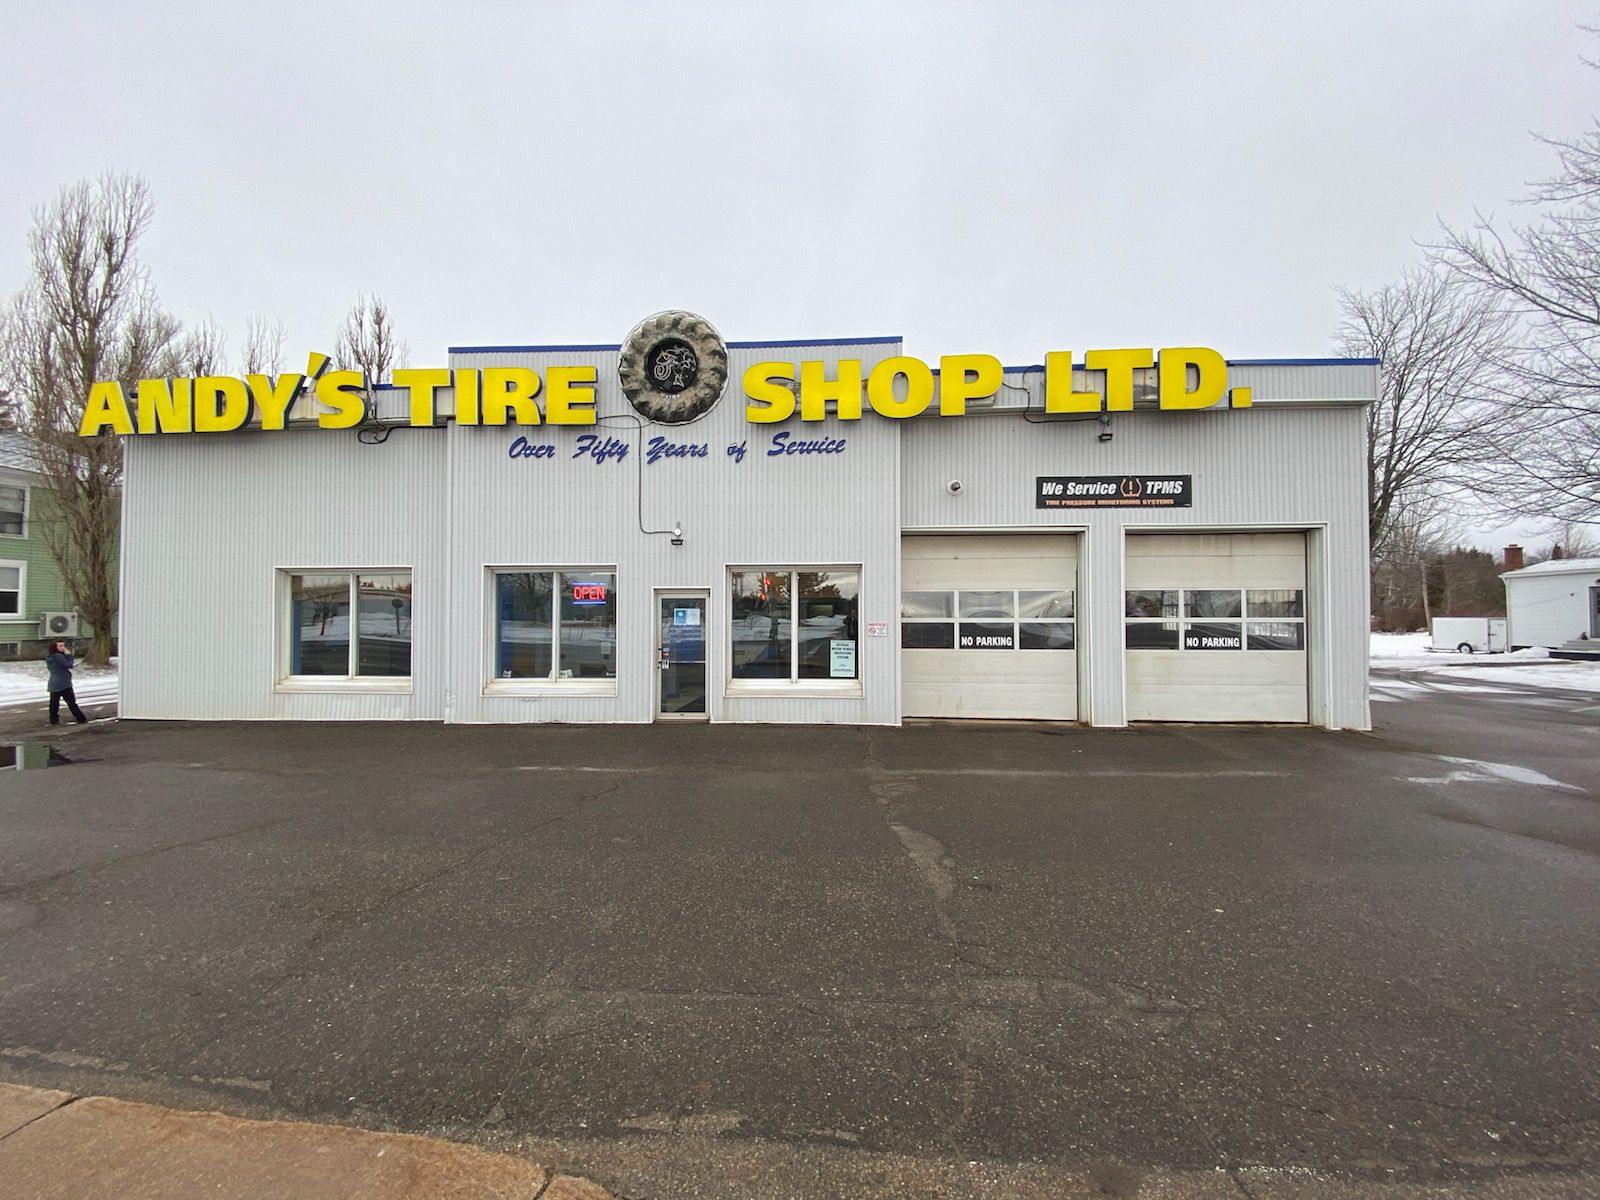 Andy's Tire Shop Limited - Kingston 473 Main St, Kingston Nova Scotia B0P 1R0